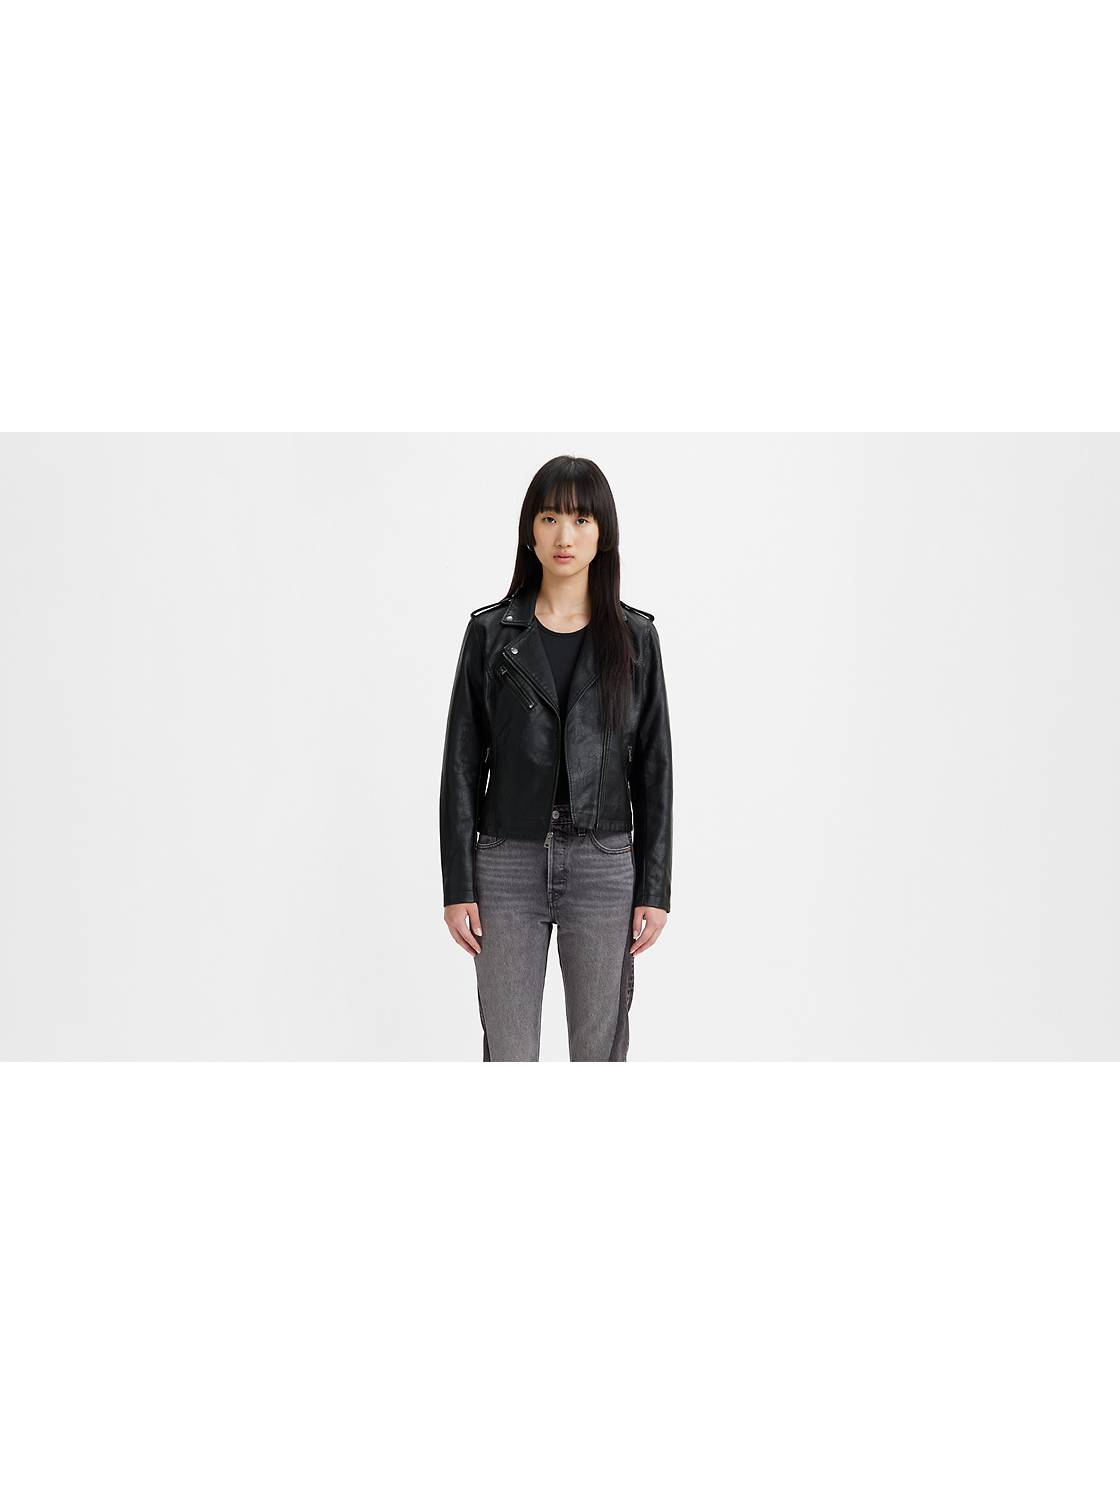 Shop Women's Jackets, Outerwear & Coats